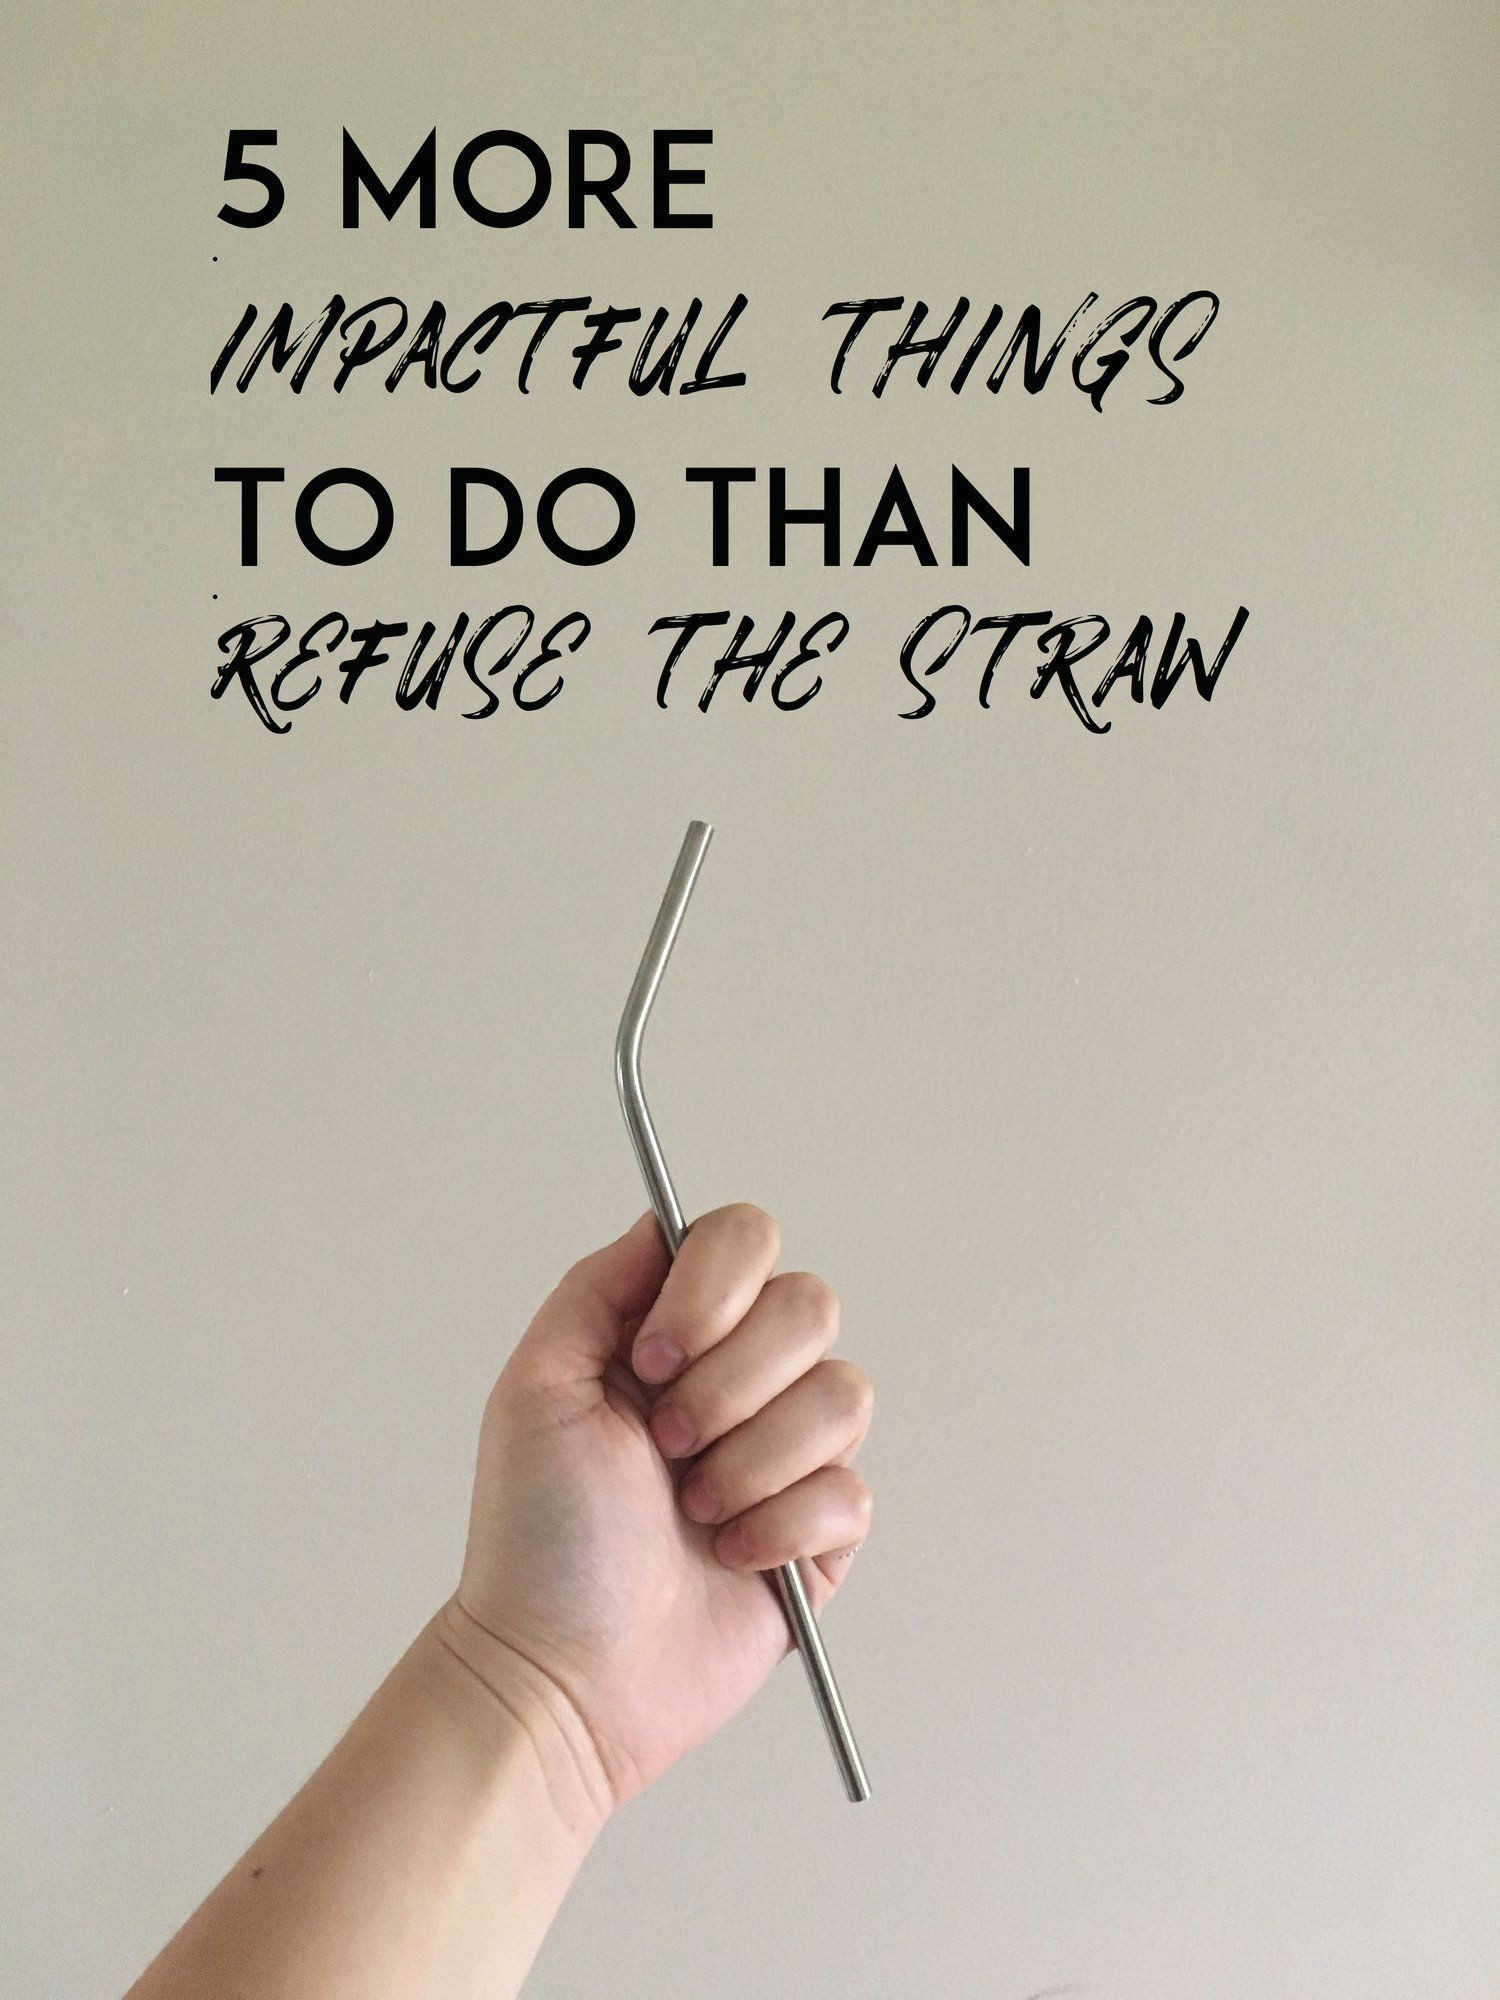 5 more impactful things to do than refuse a straw zerowaste lowimpact ecofriendly